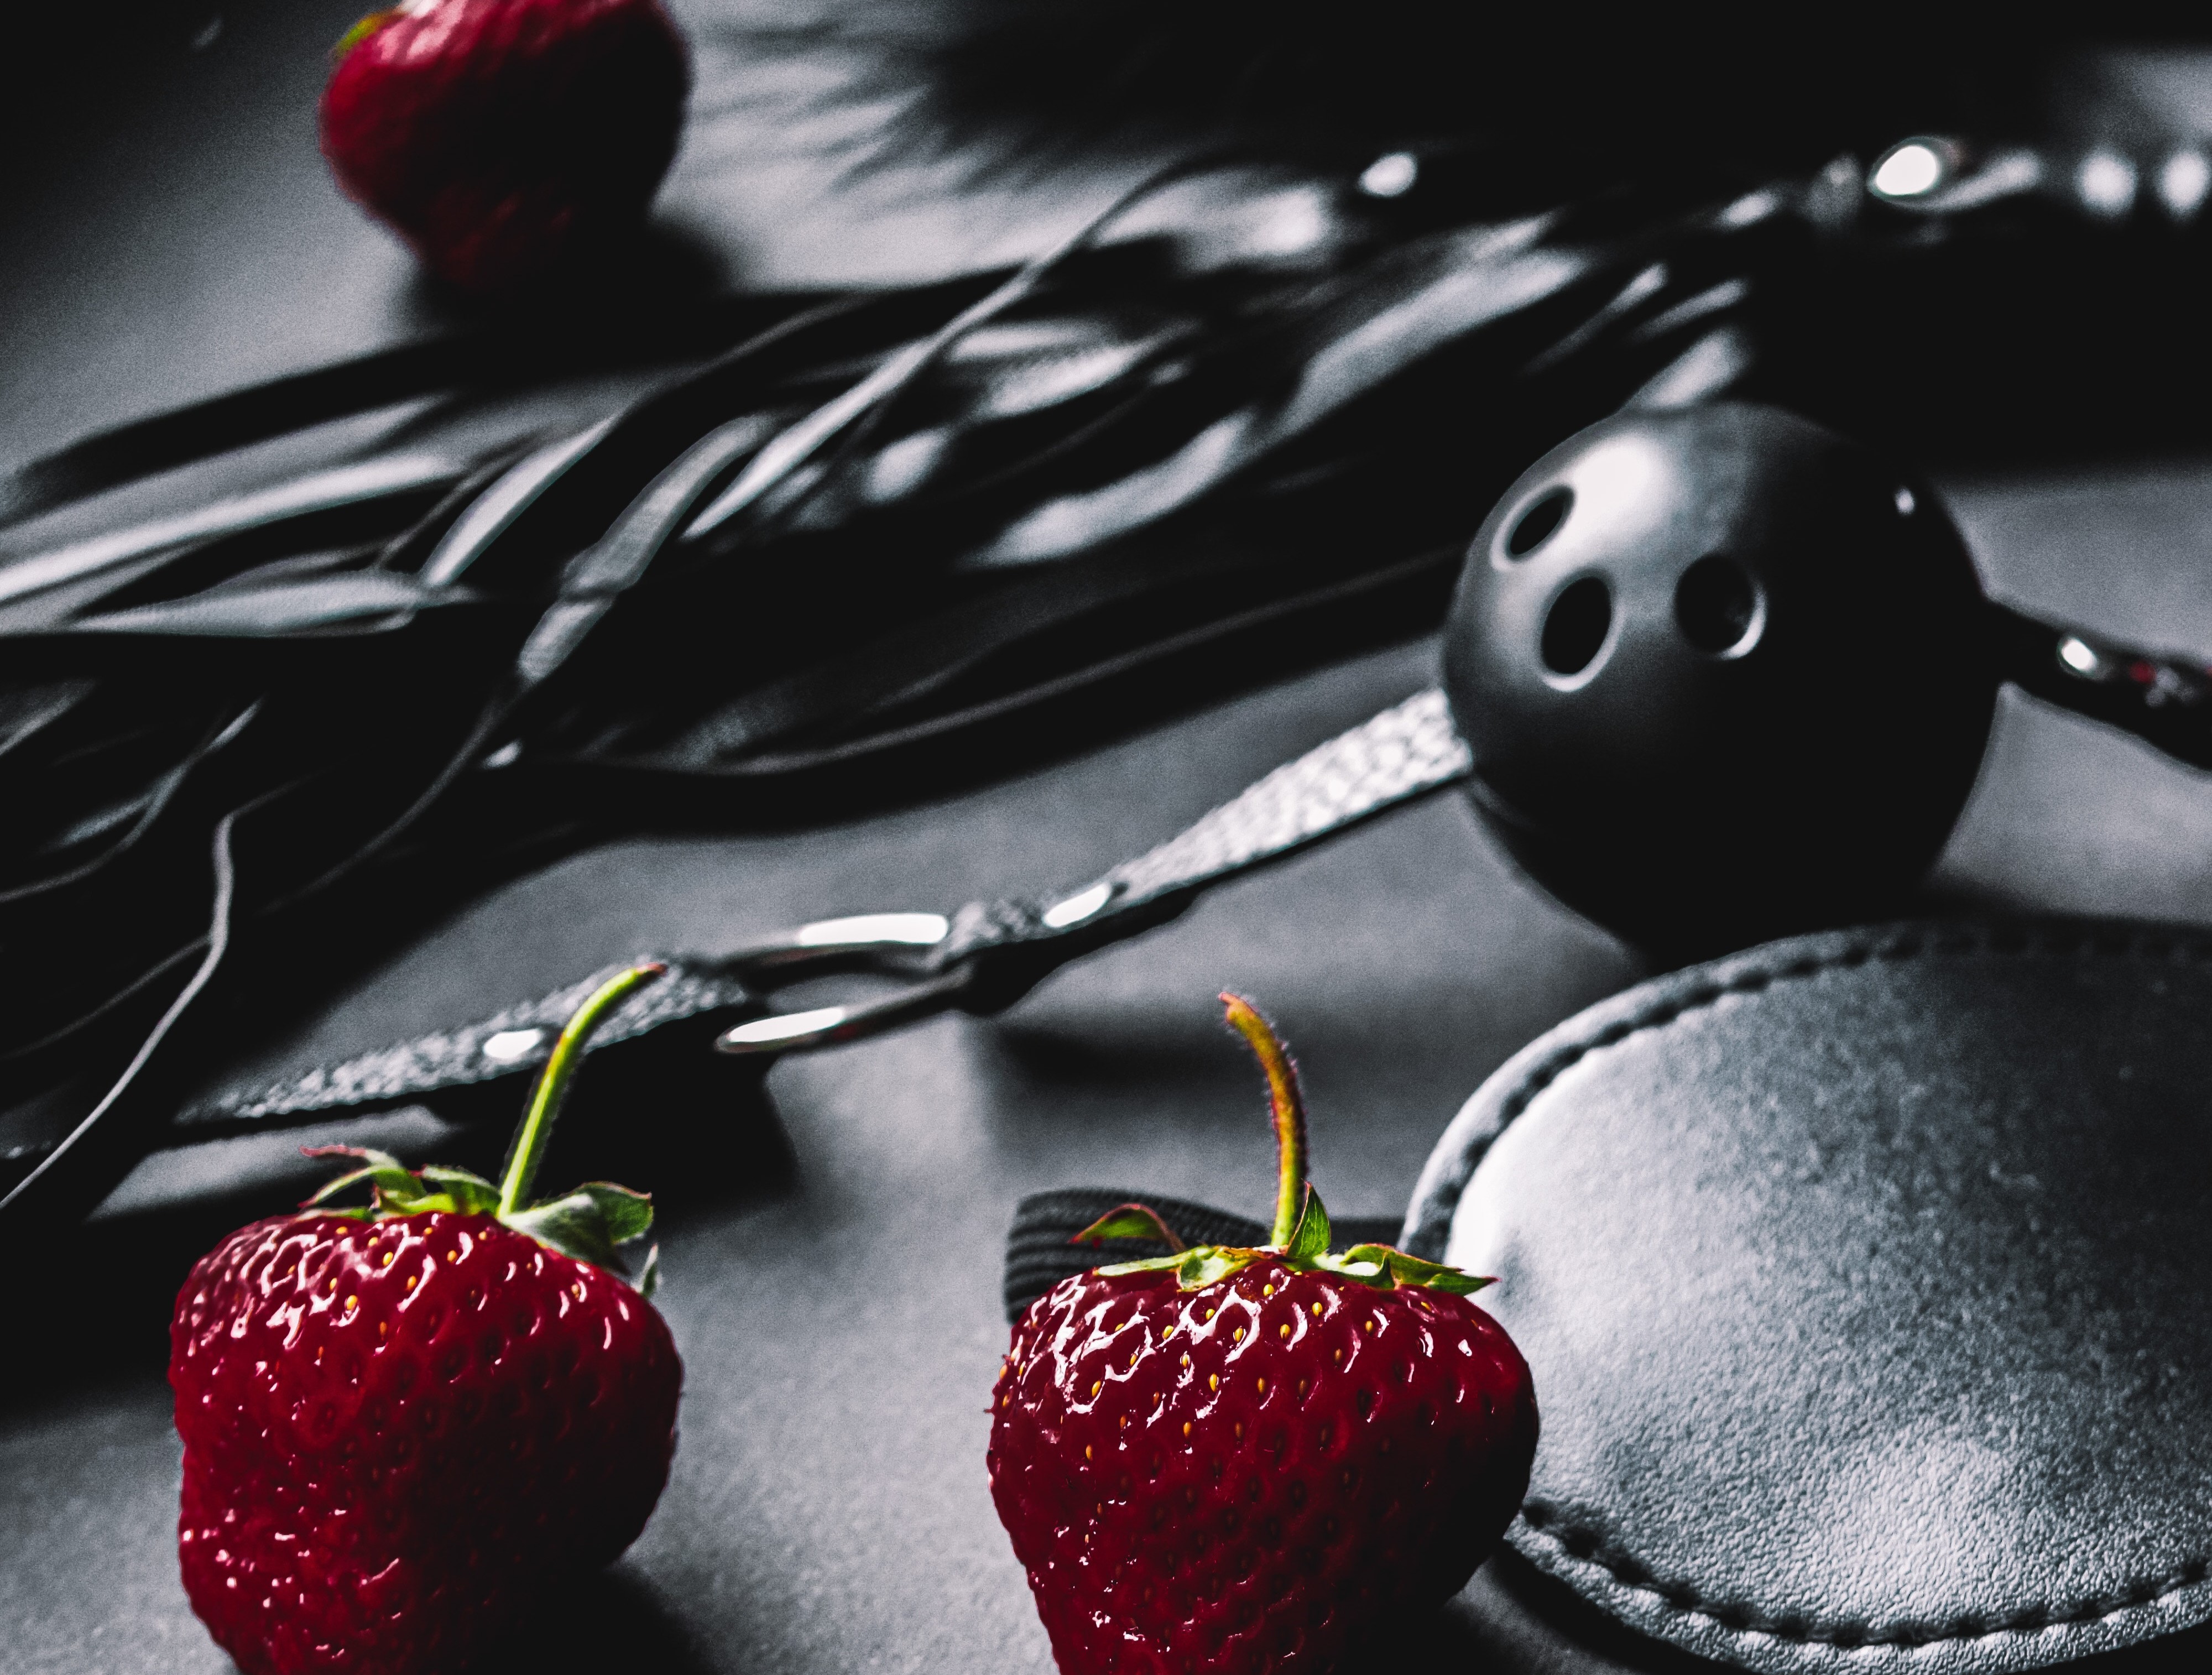 Black bondage toys laid out beside ripe strawberries.